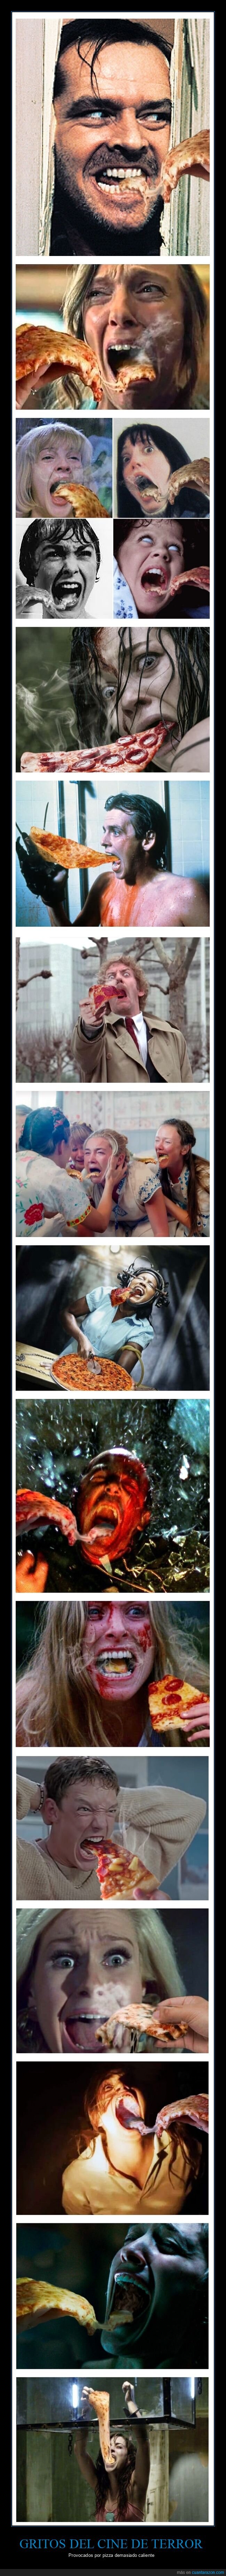 gritos,cine,terror,pizza,caliente,photoshop